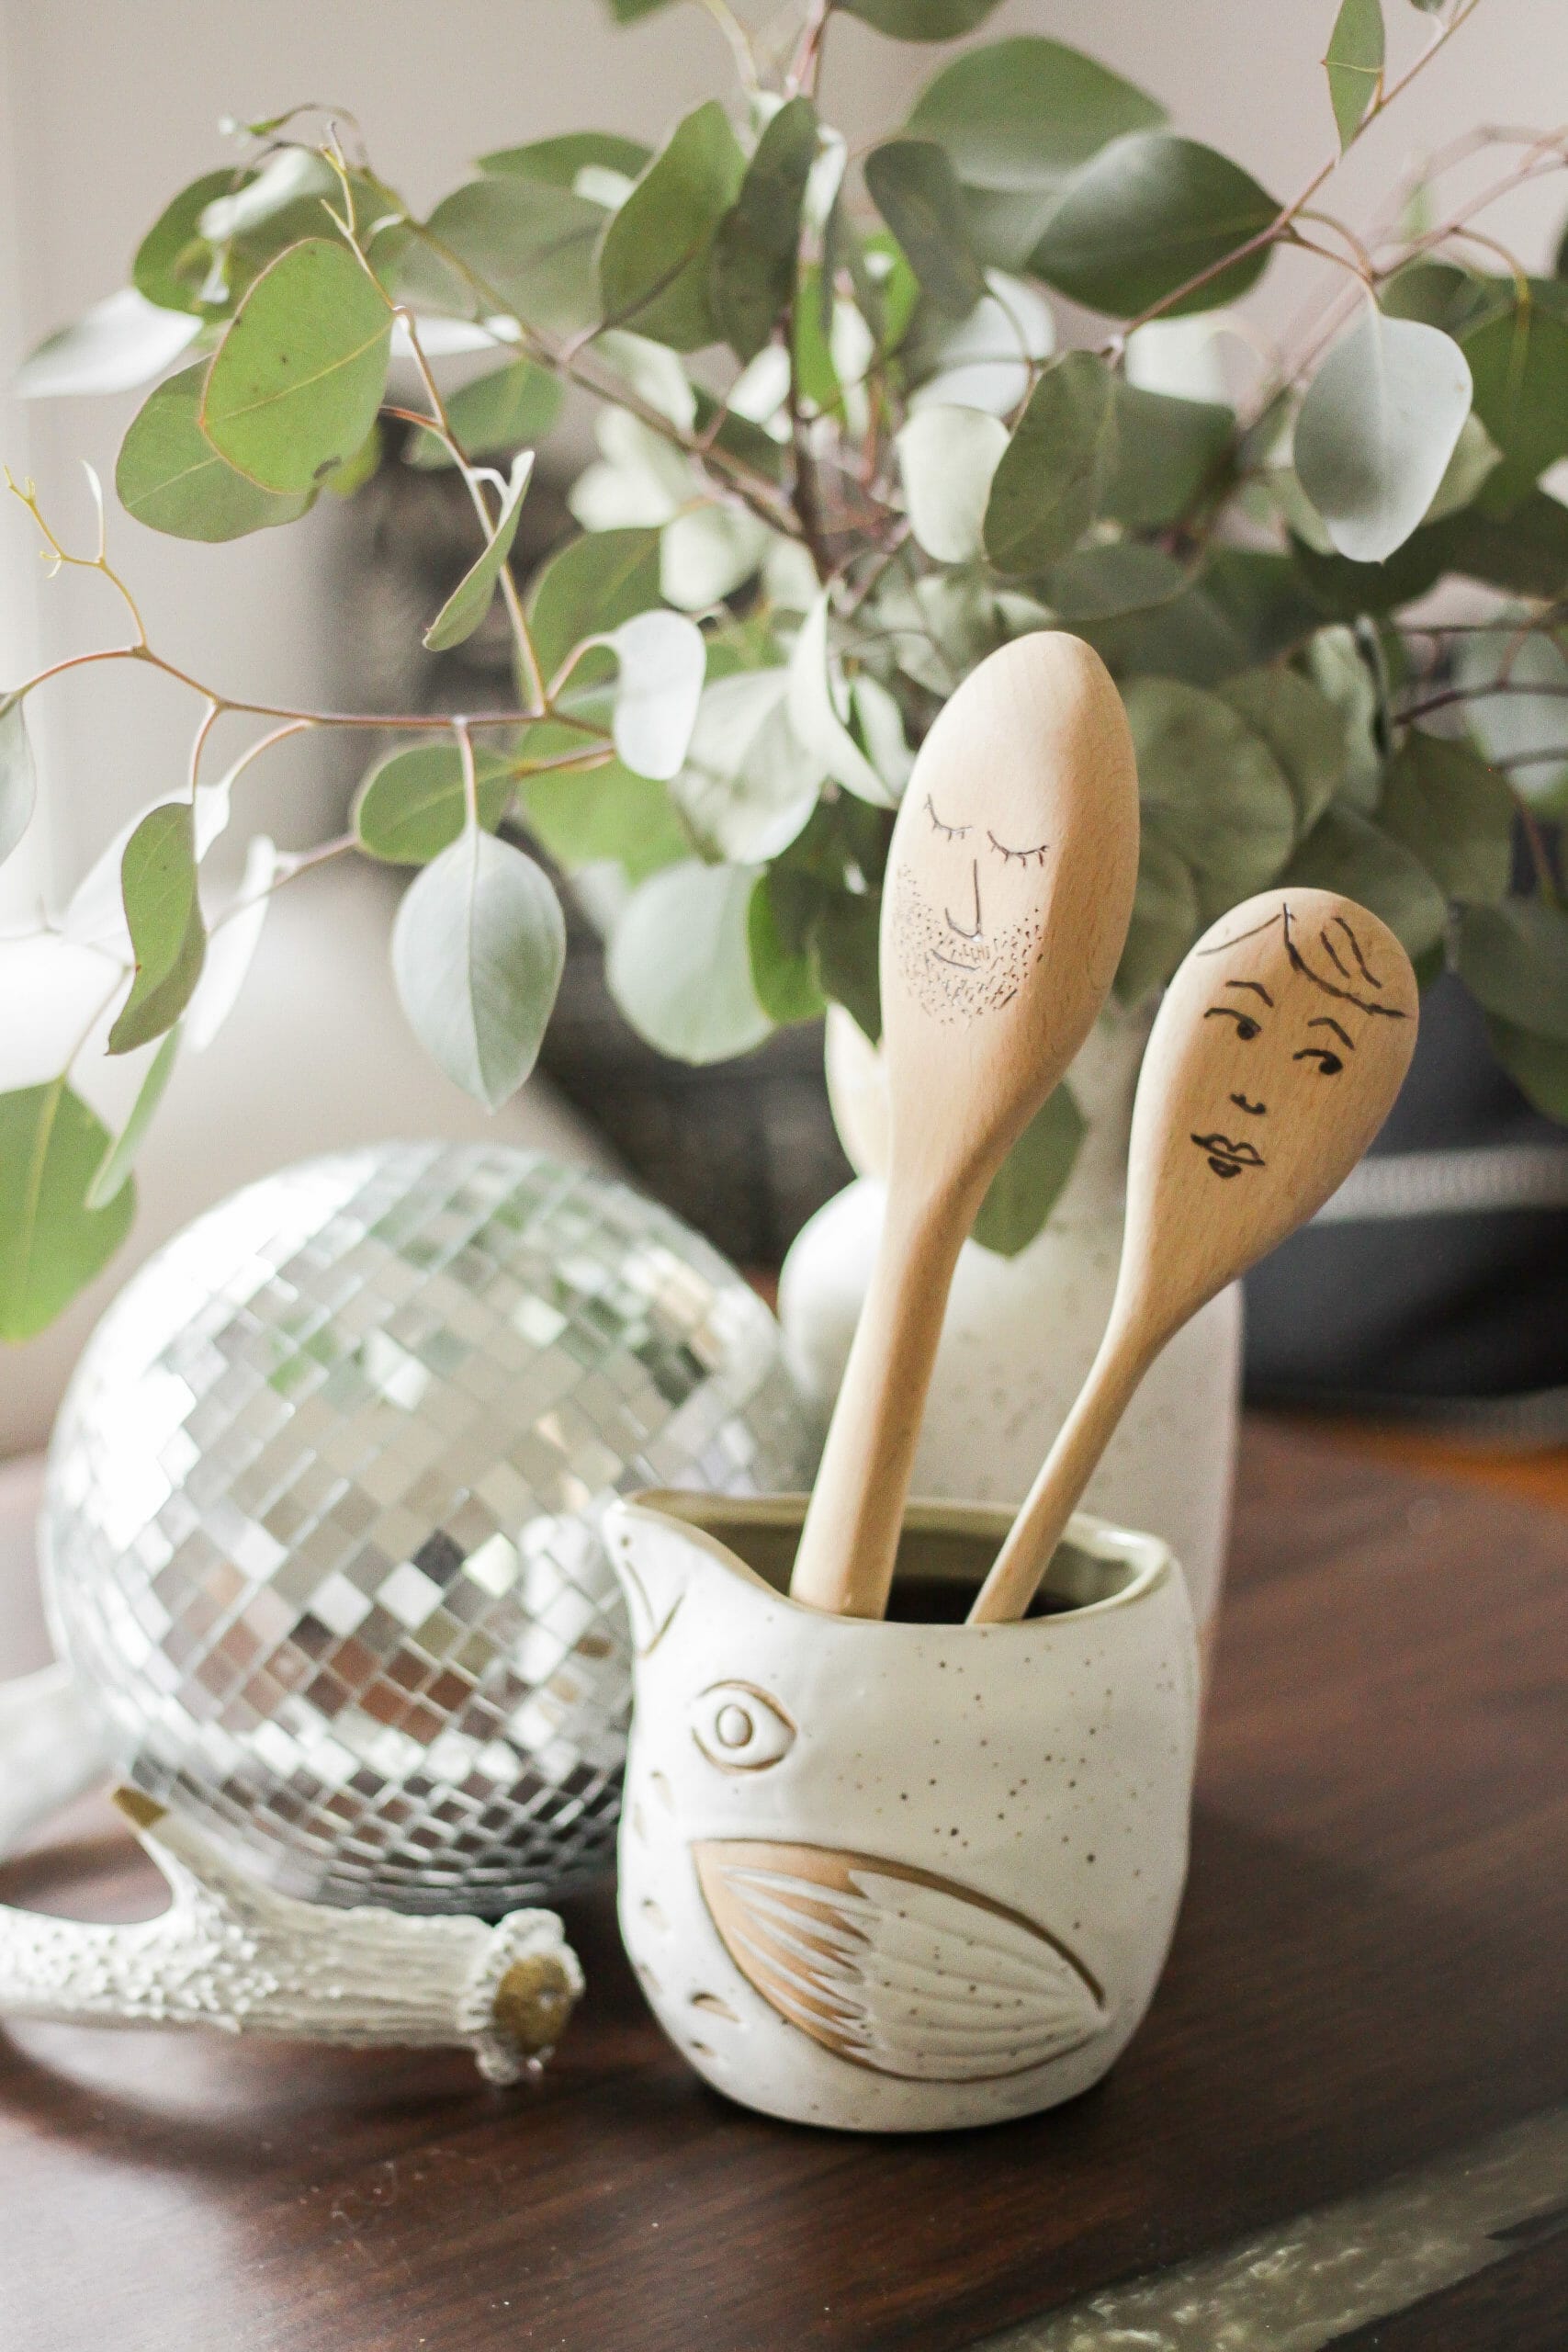 https://eyqutuda73b.exactdn.com/wp-content/uploads/2019/11/DIY-wood-burned-spoons-hostess-gift-idea-scaled.jpg